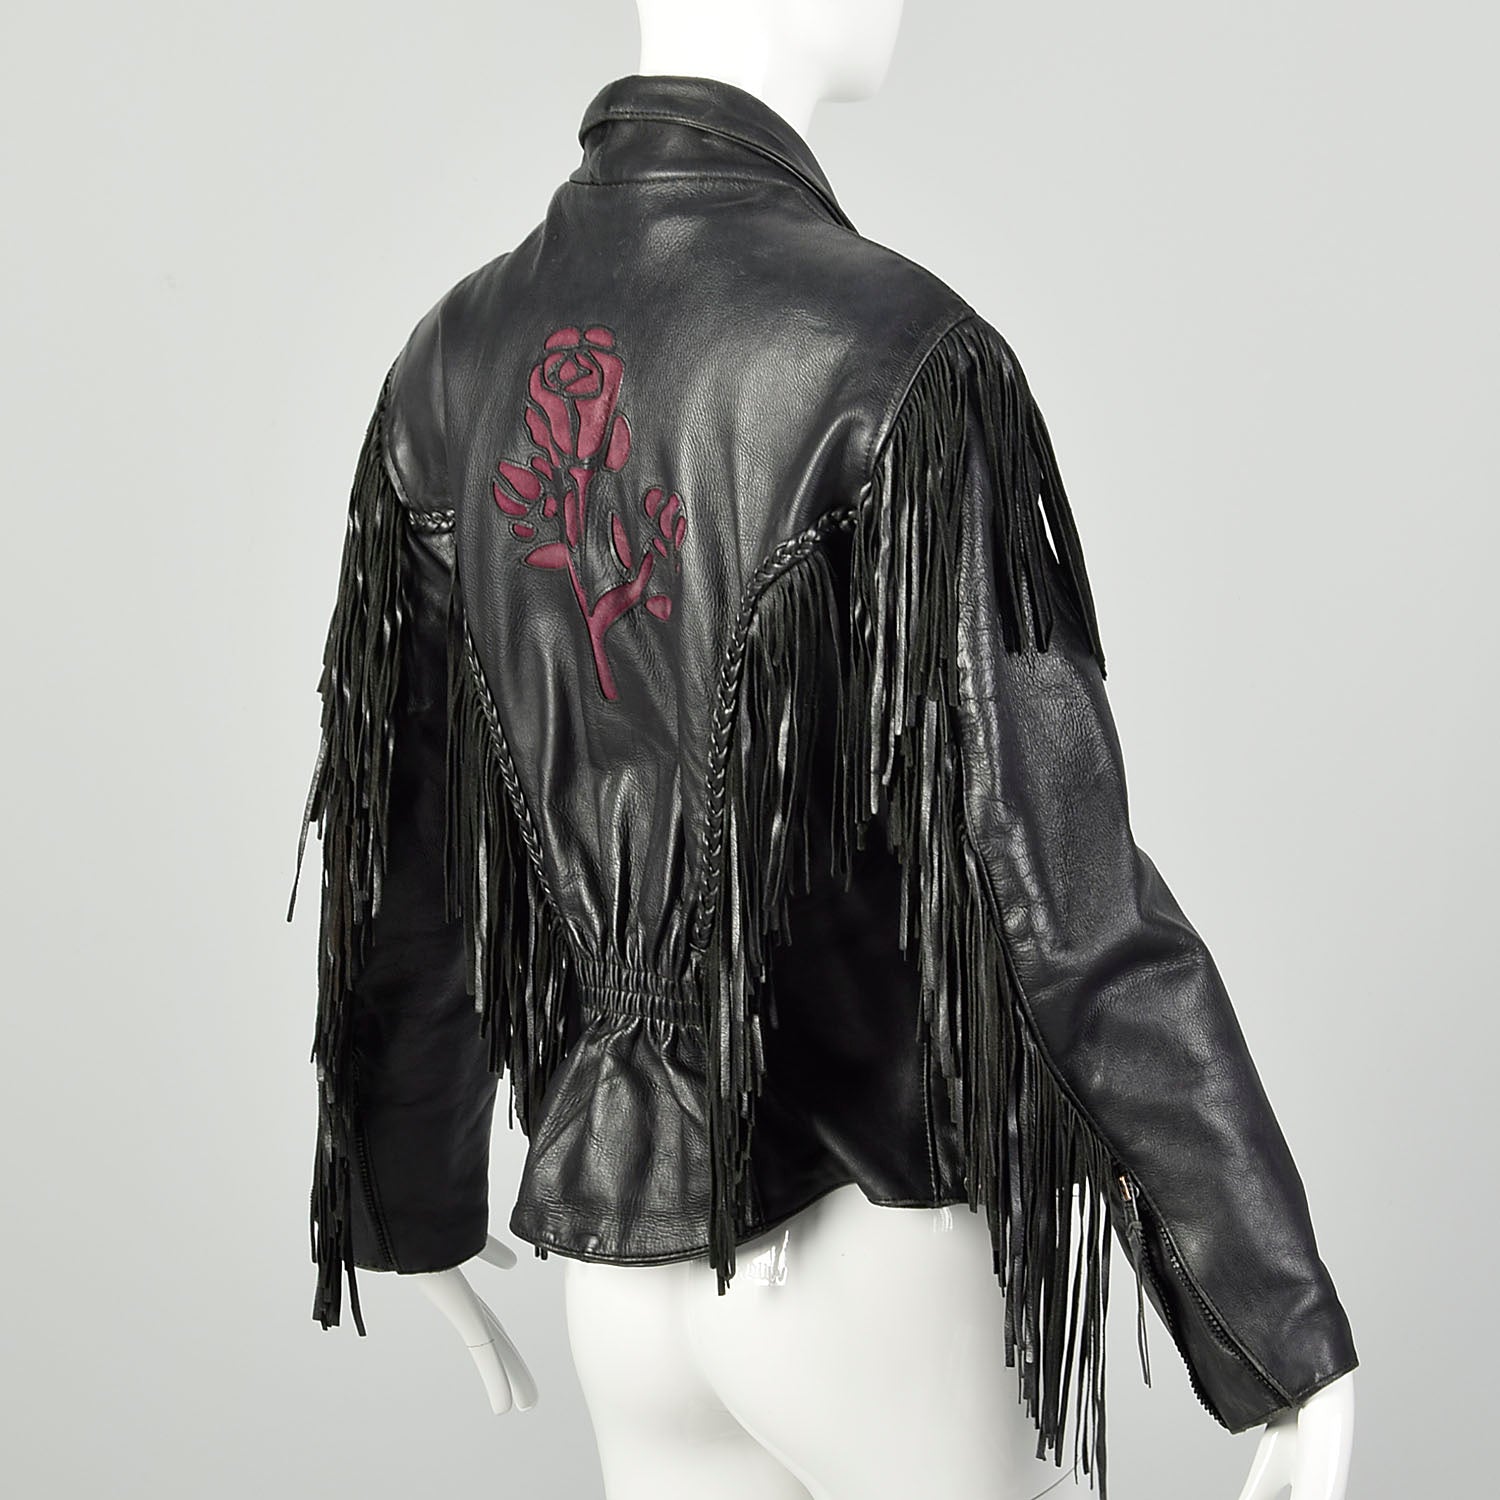 Small 1980s Black Leather Biker Jacket Fringe Purple Rose Inlays 